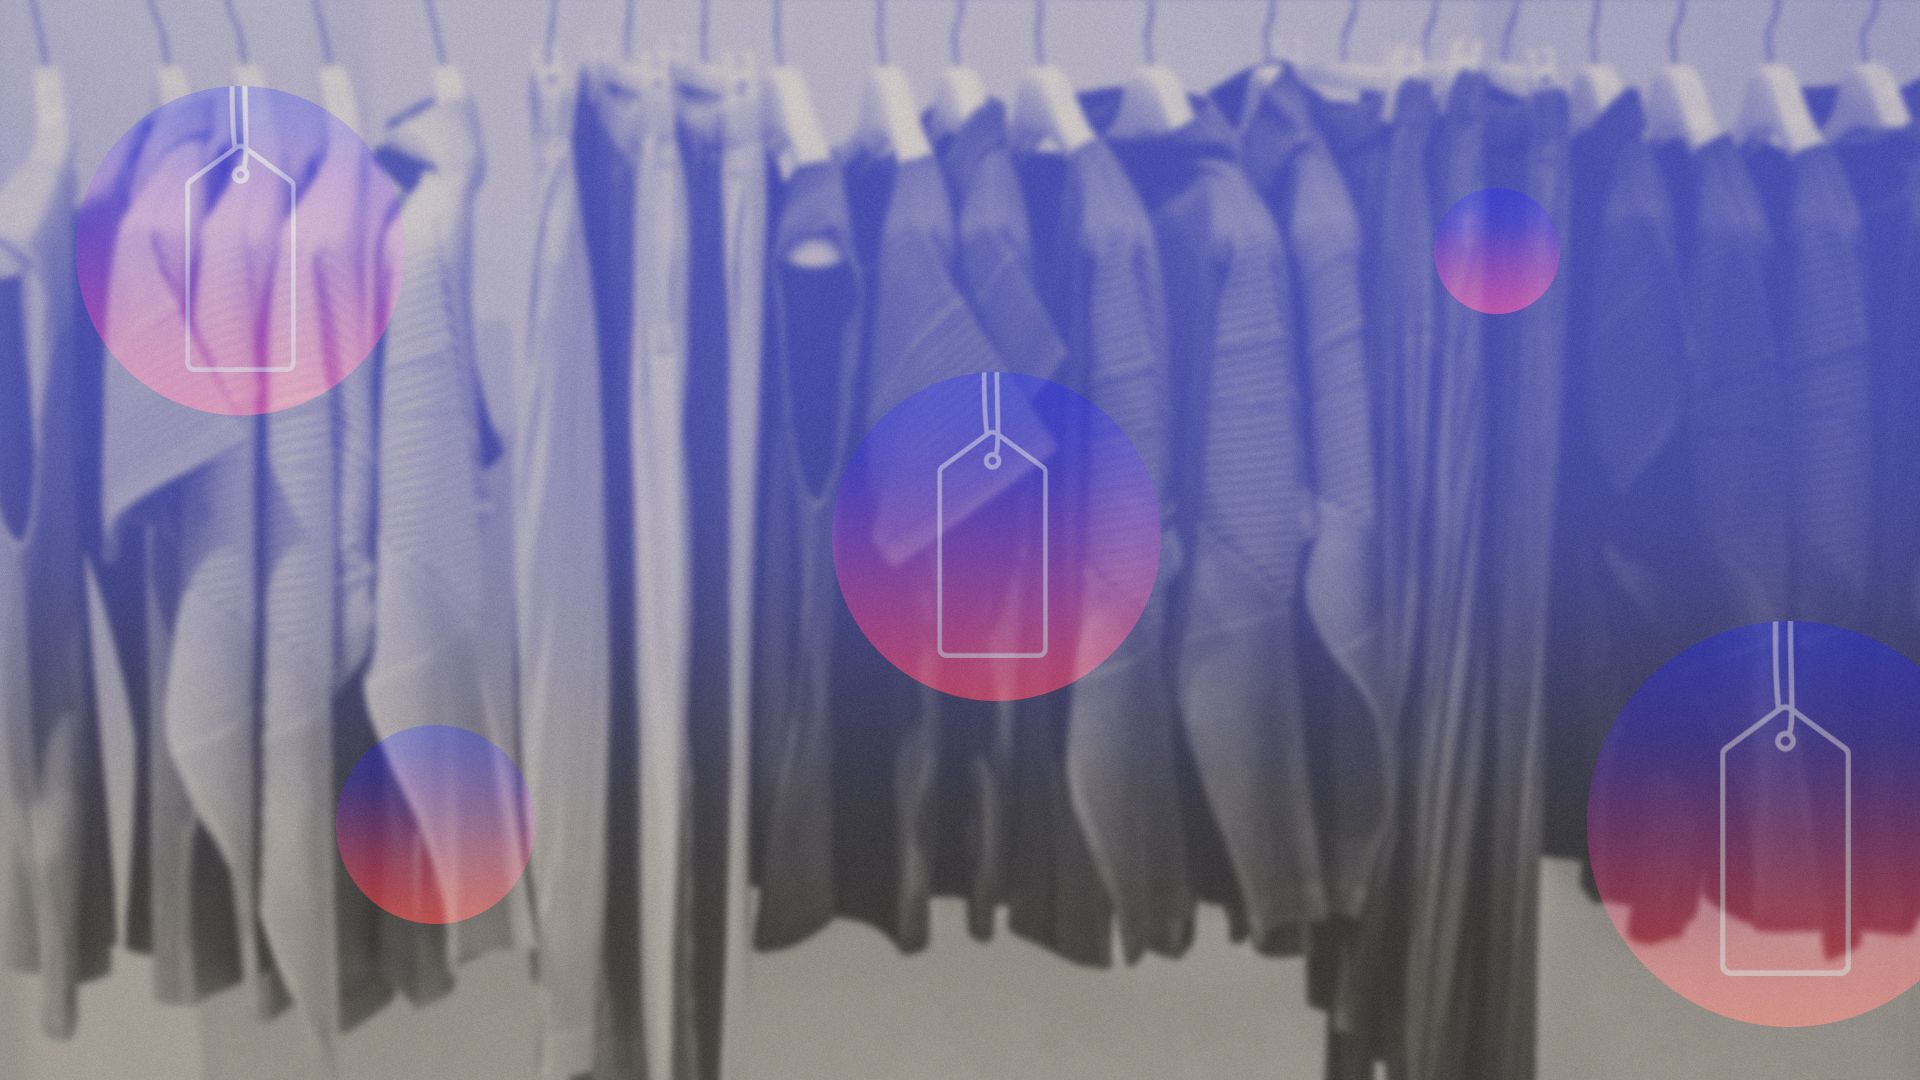 duurzaam is kleding de webshop van BN'ers? - Zembla - BNNVARA